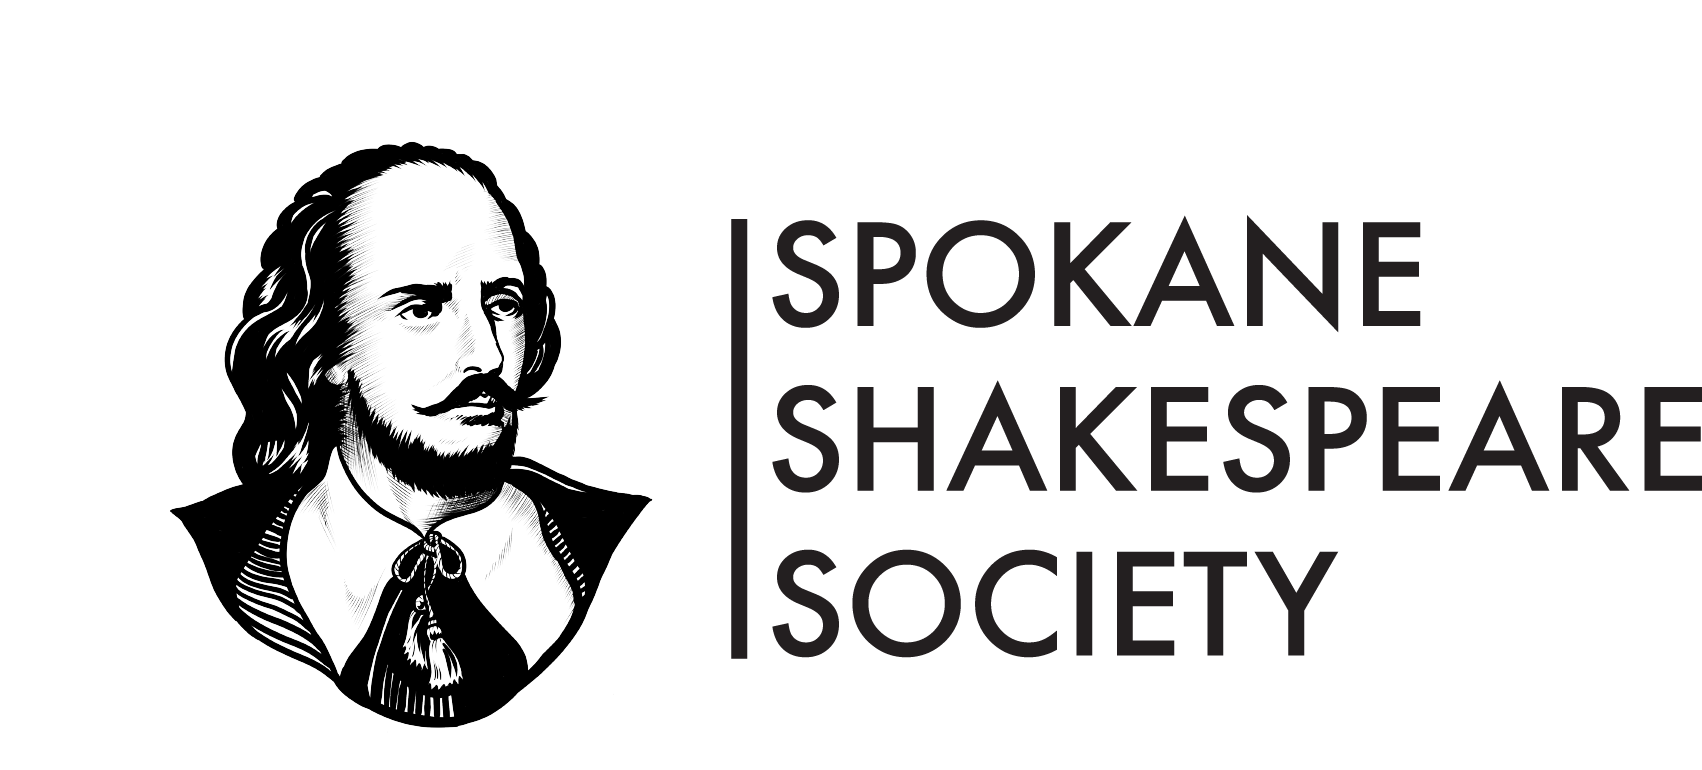 Spokane Shakespeare Society Logo Graphic